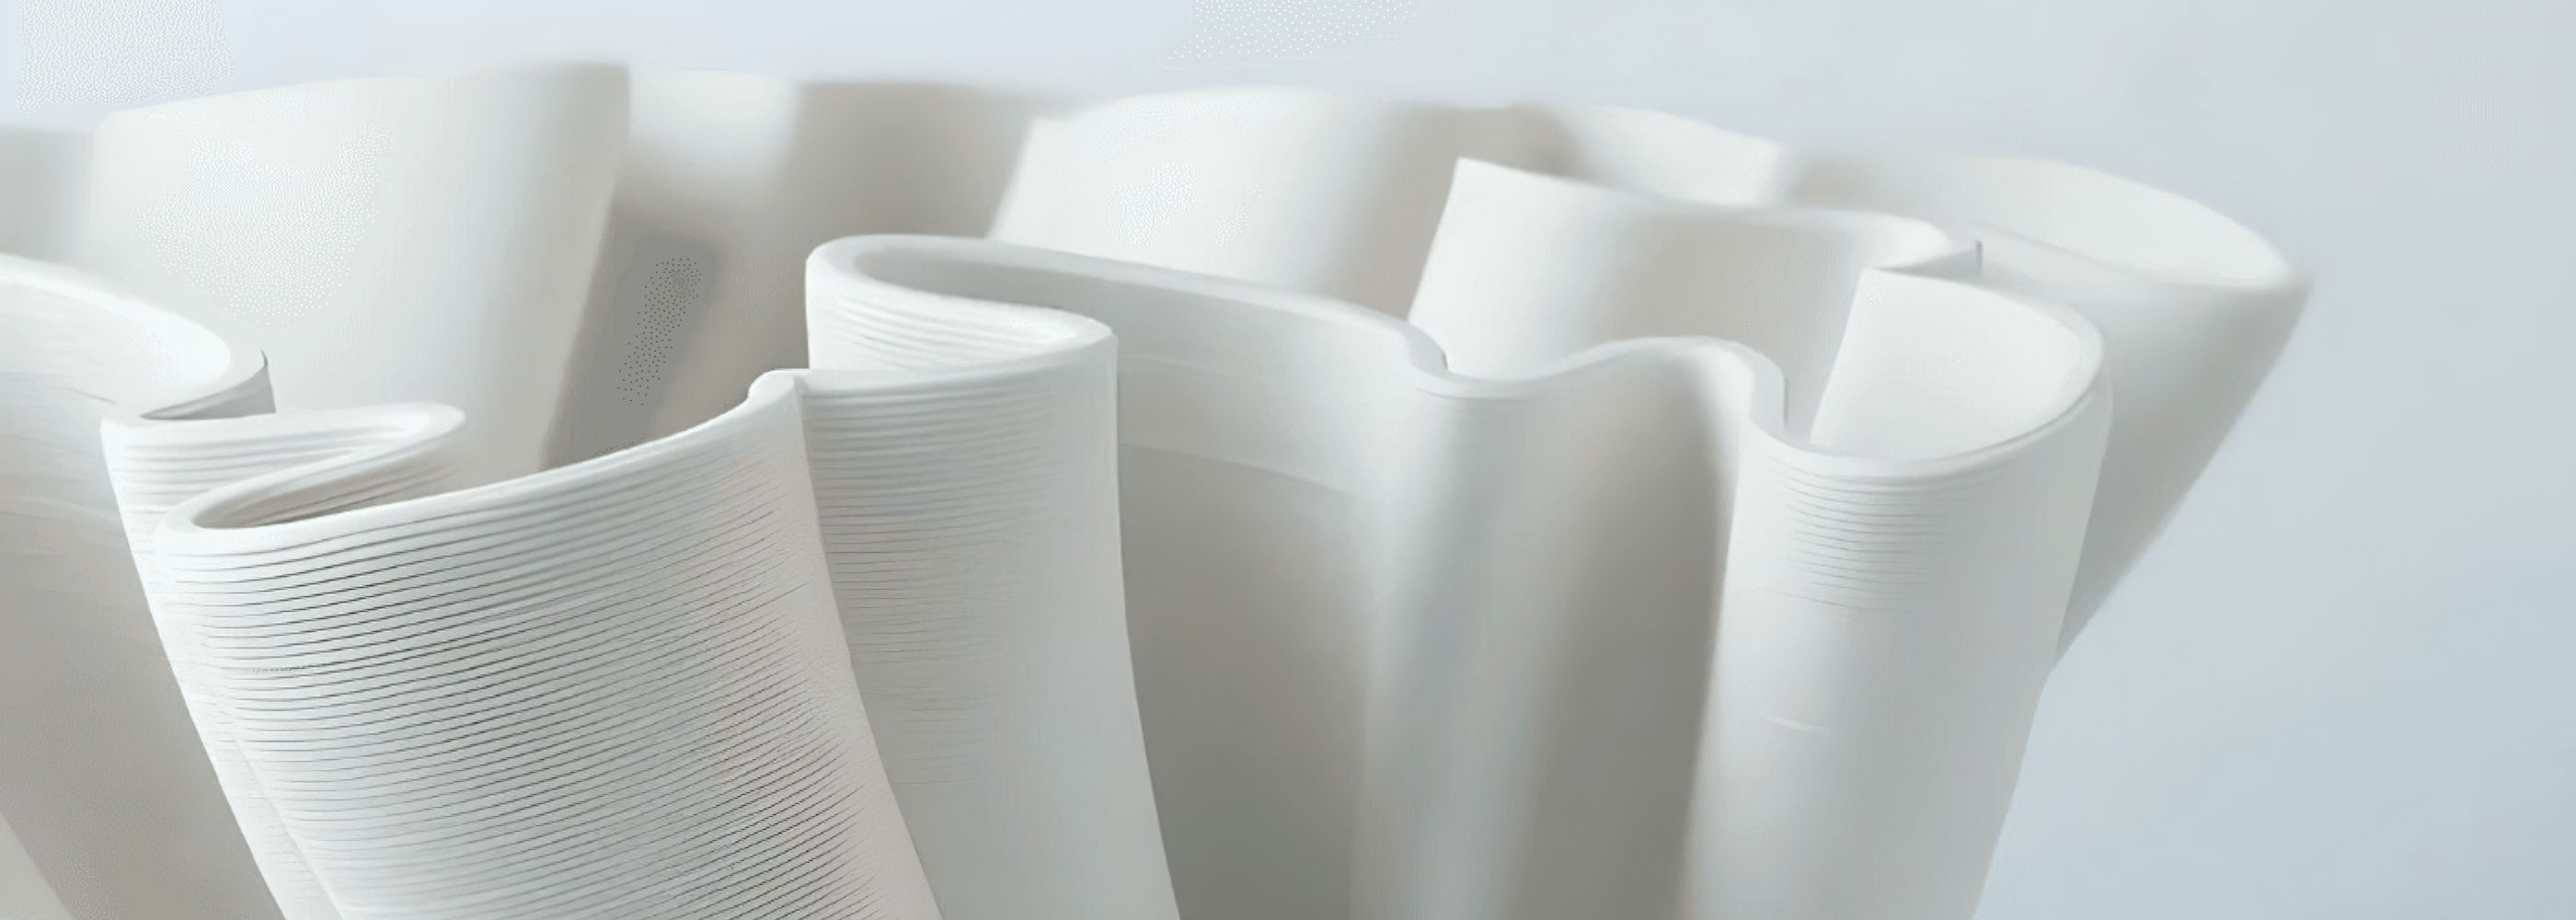 White ceramic wave bowl image banner